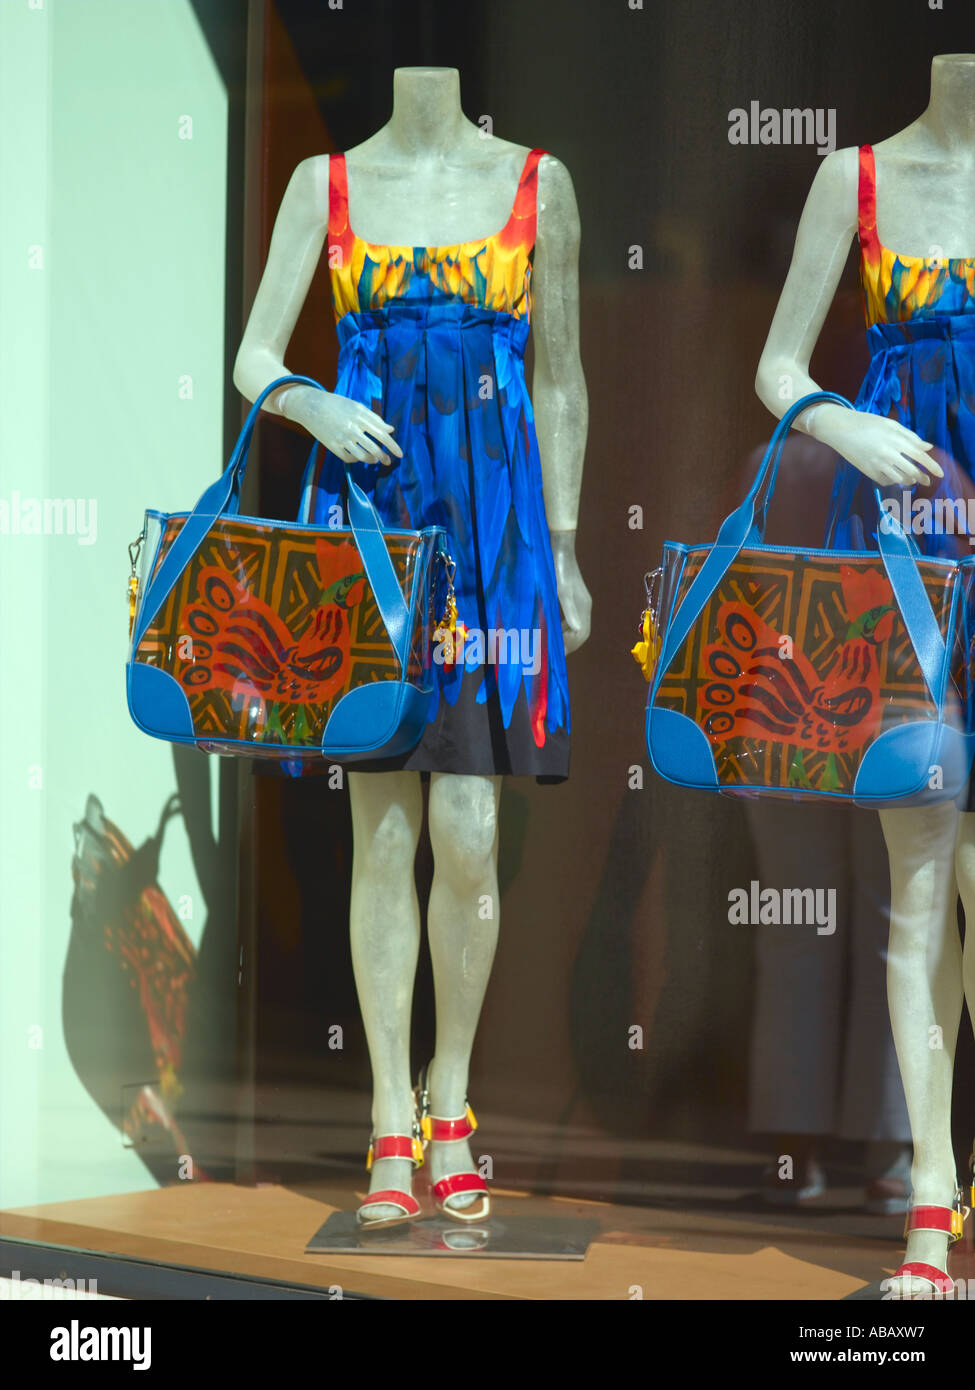 Prada shopping bag hi-res stock photography and images - Alamy